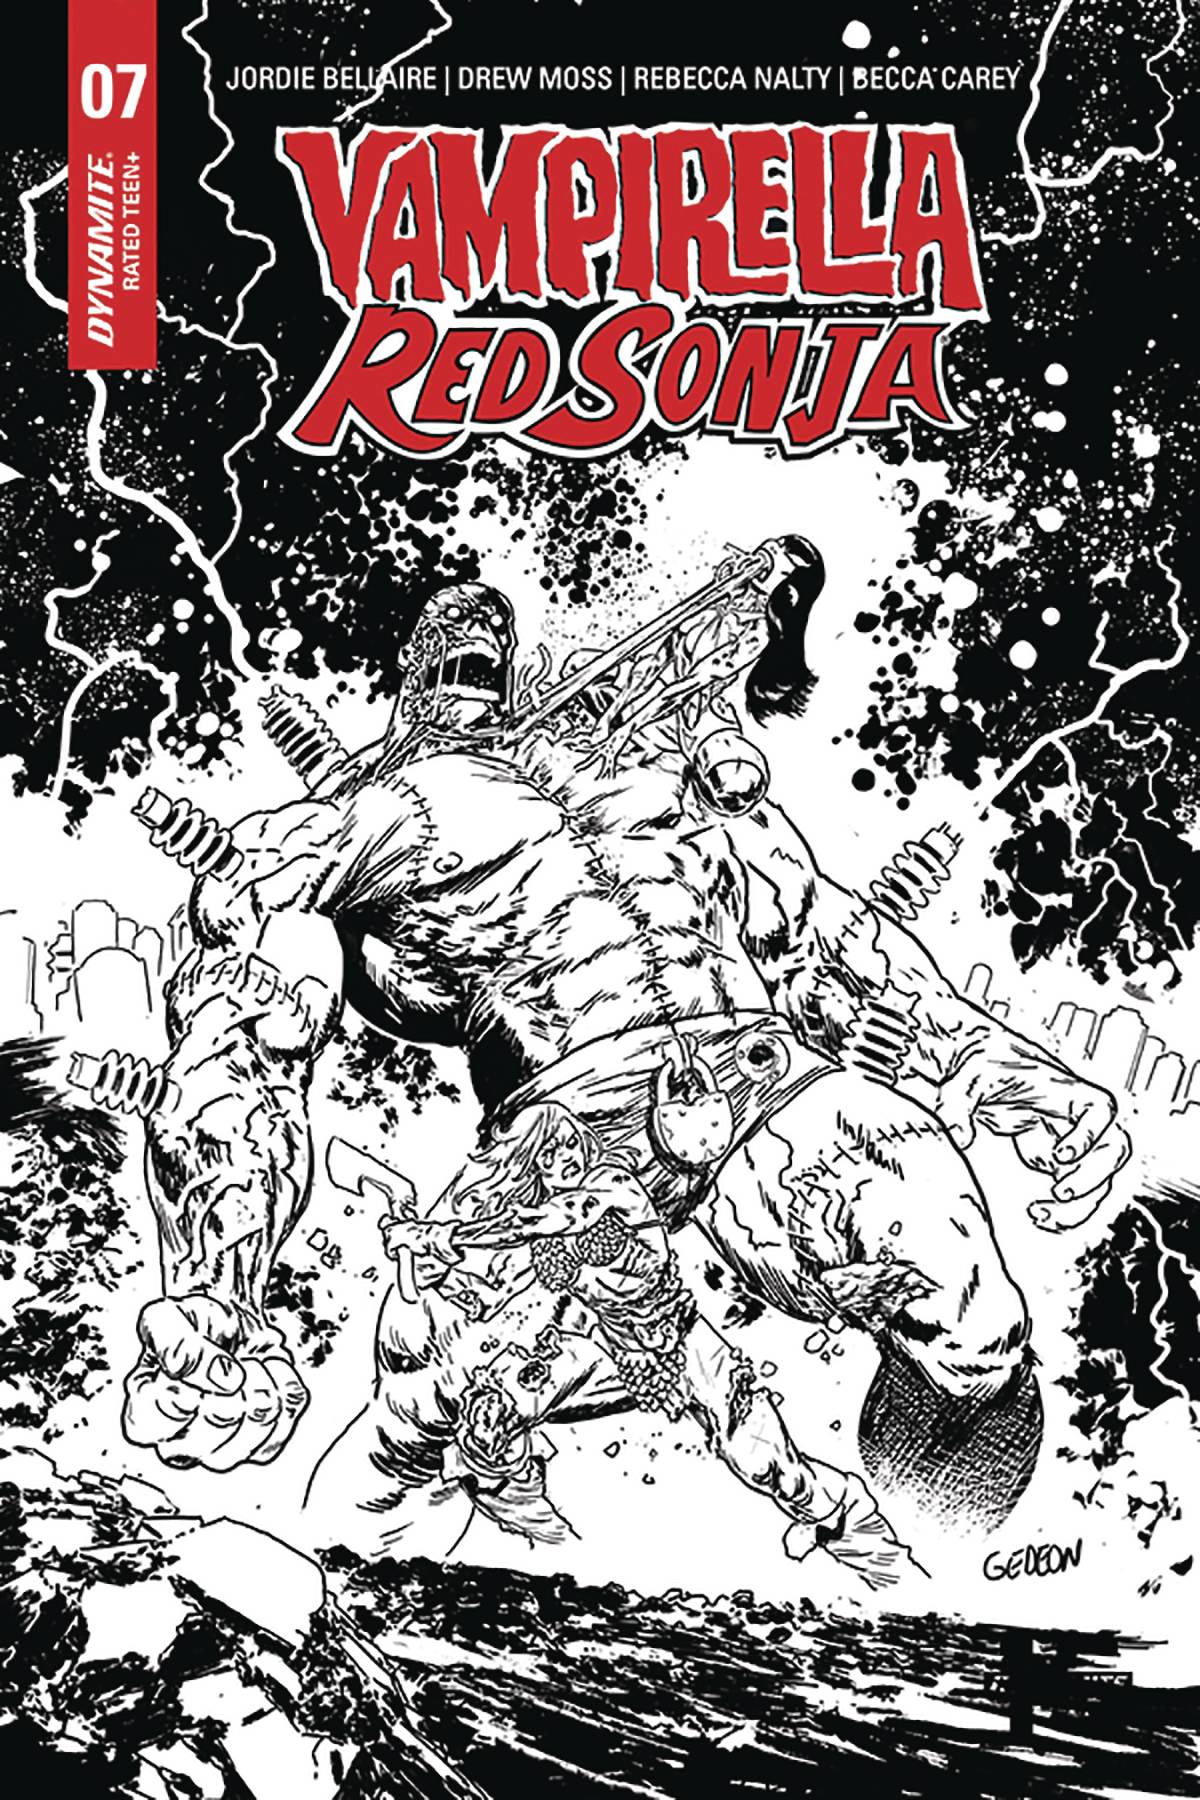 Vampirella Red Sonja #7 15 Copy Gedeon Black & White Zombie Incentive